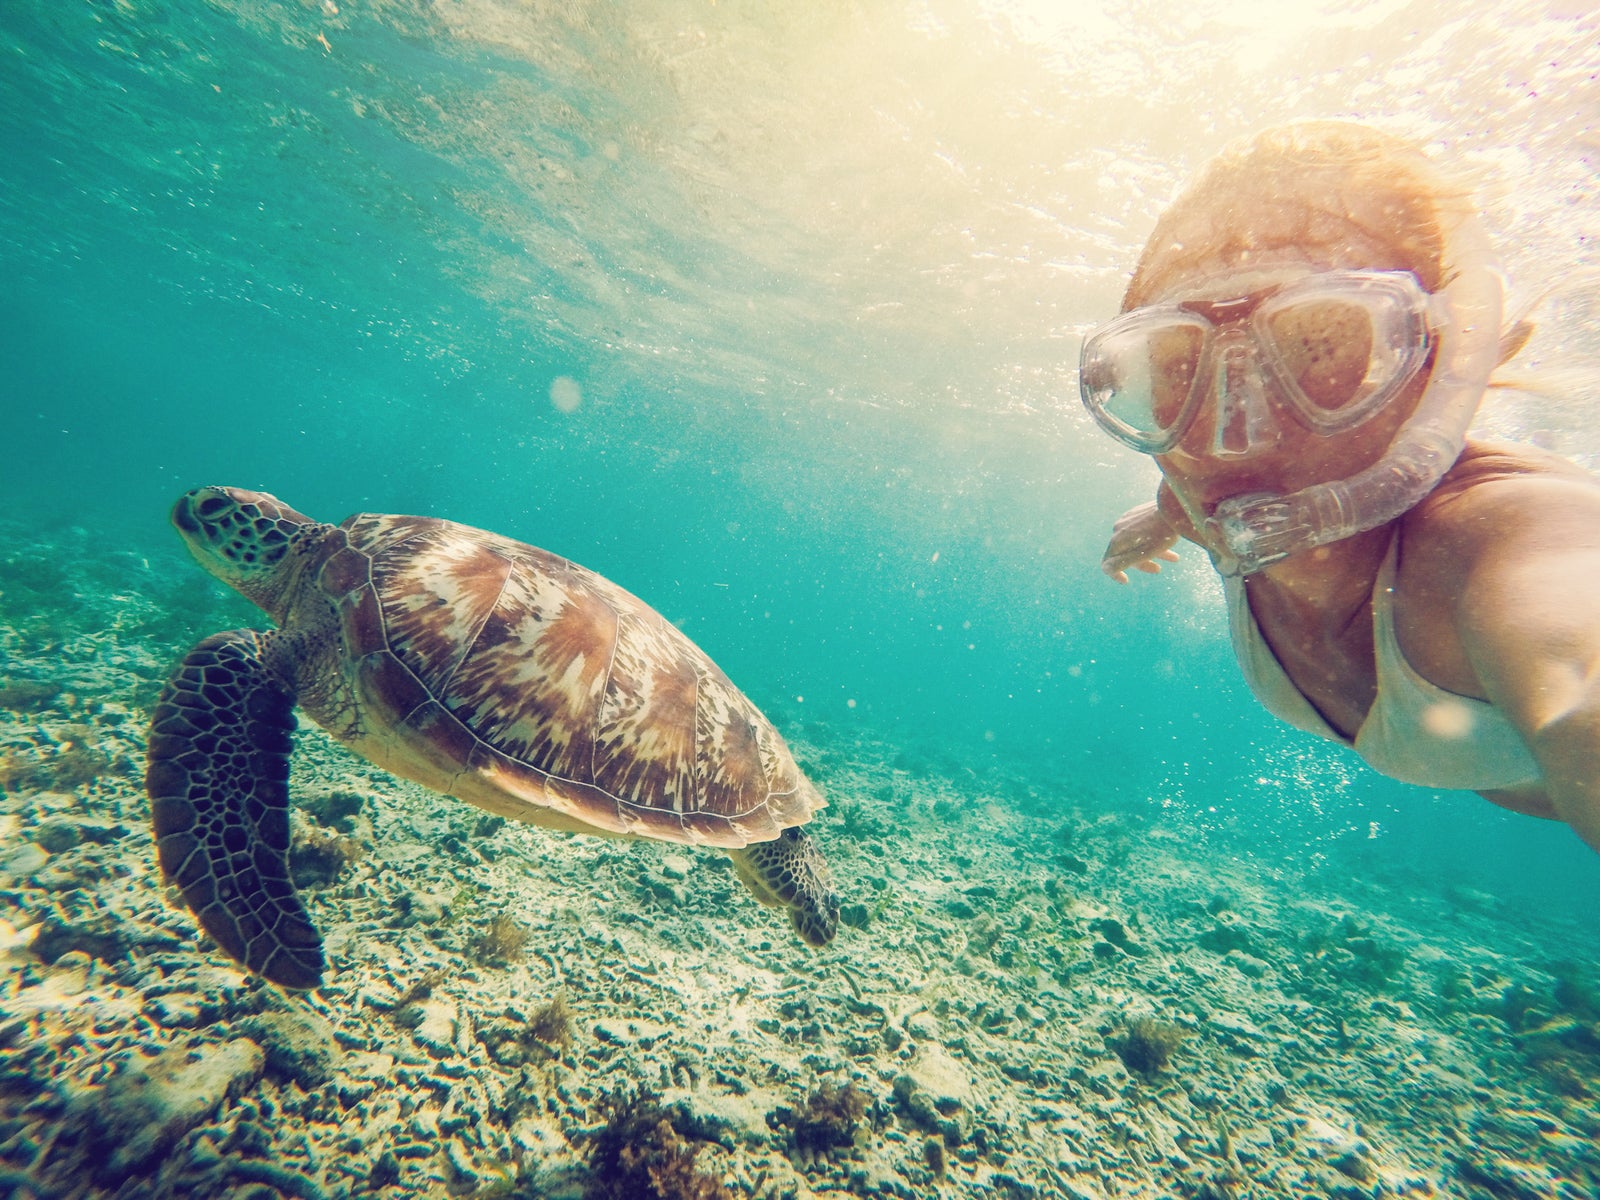 Selfie of girl with turtle underwater